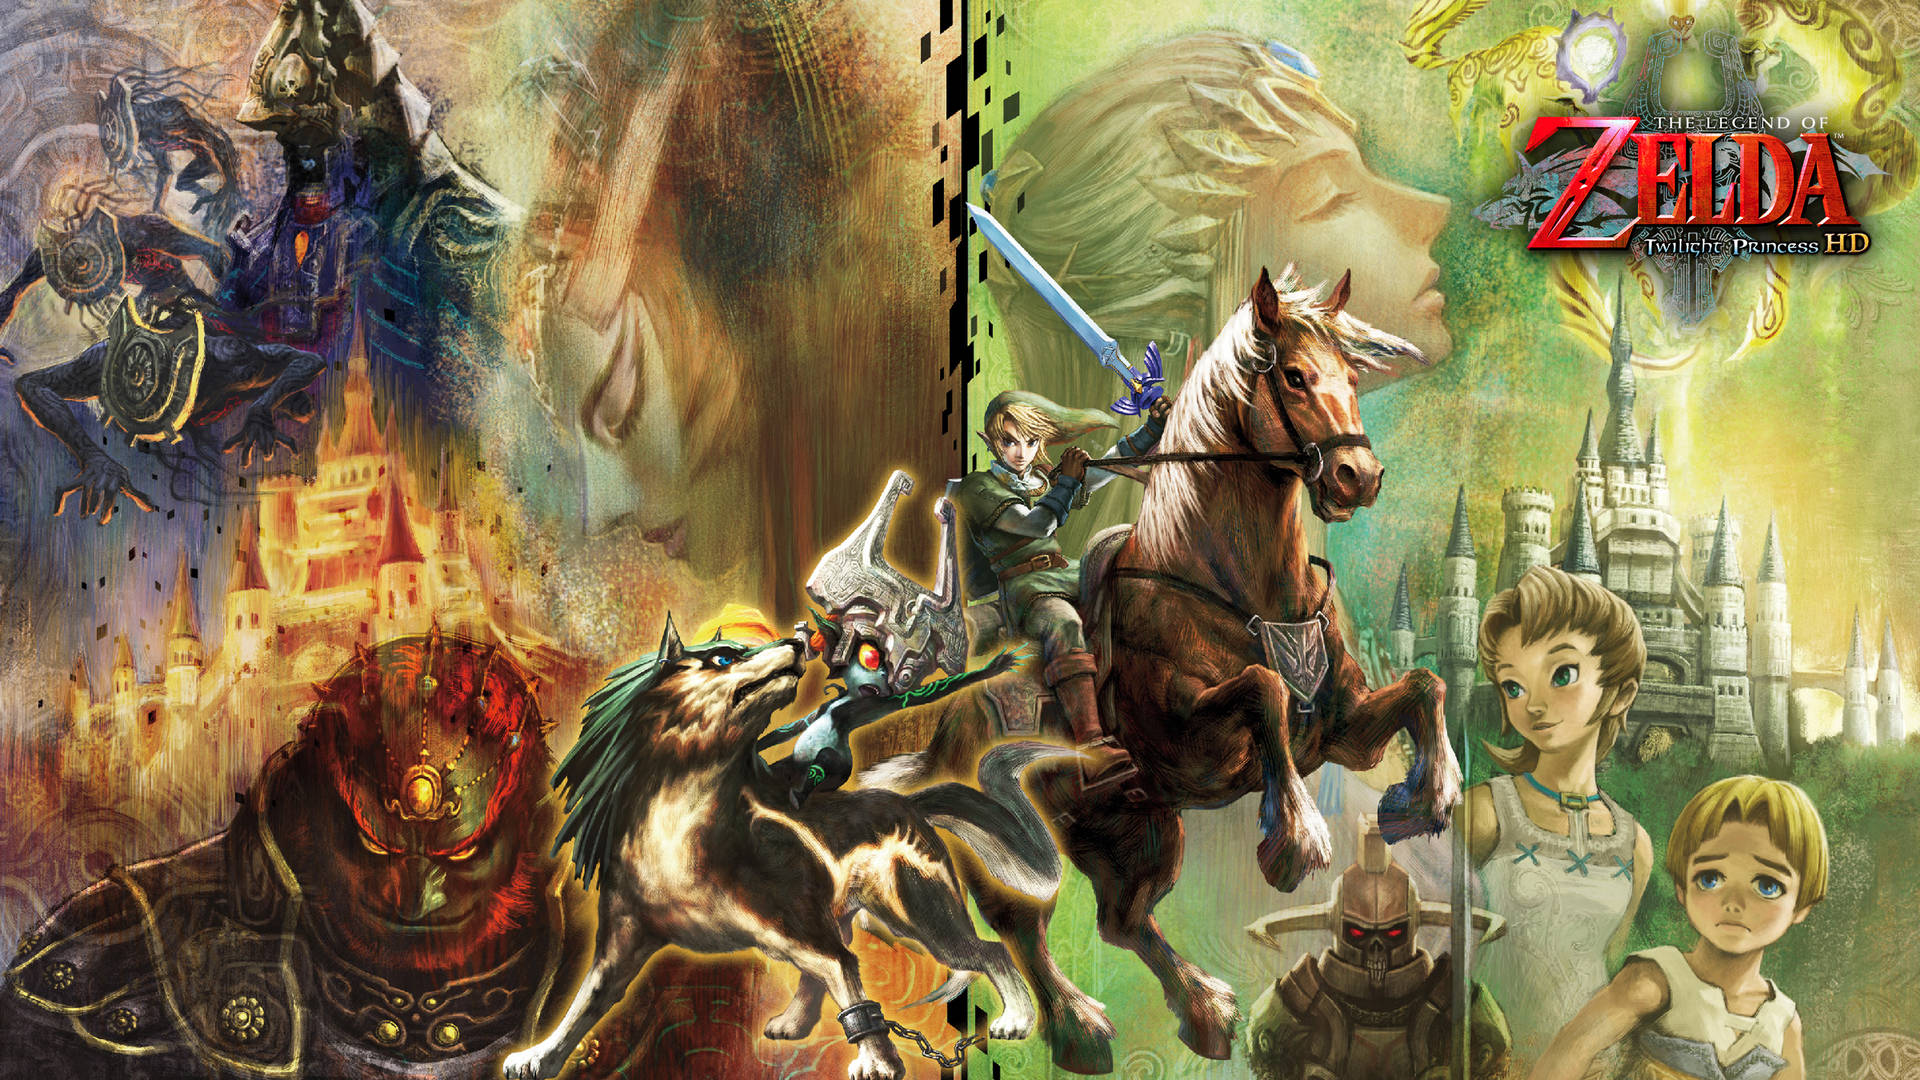 The Legend Of Zelda: Twilight Princess Hd Wallpaper Wallpaper